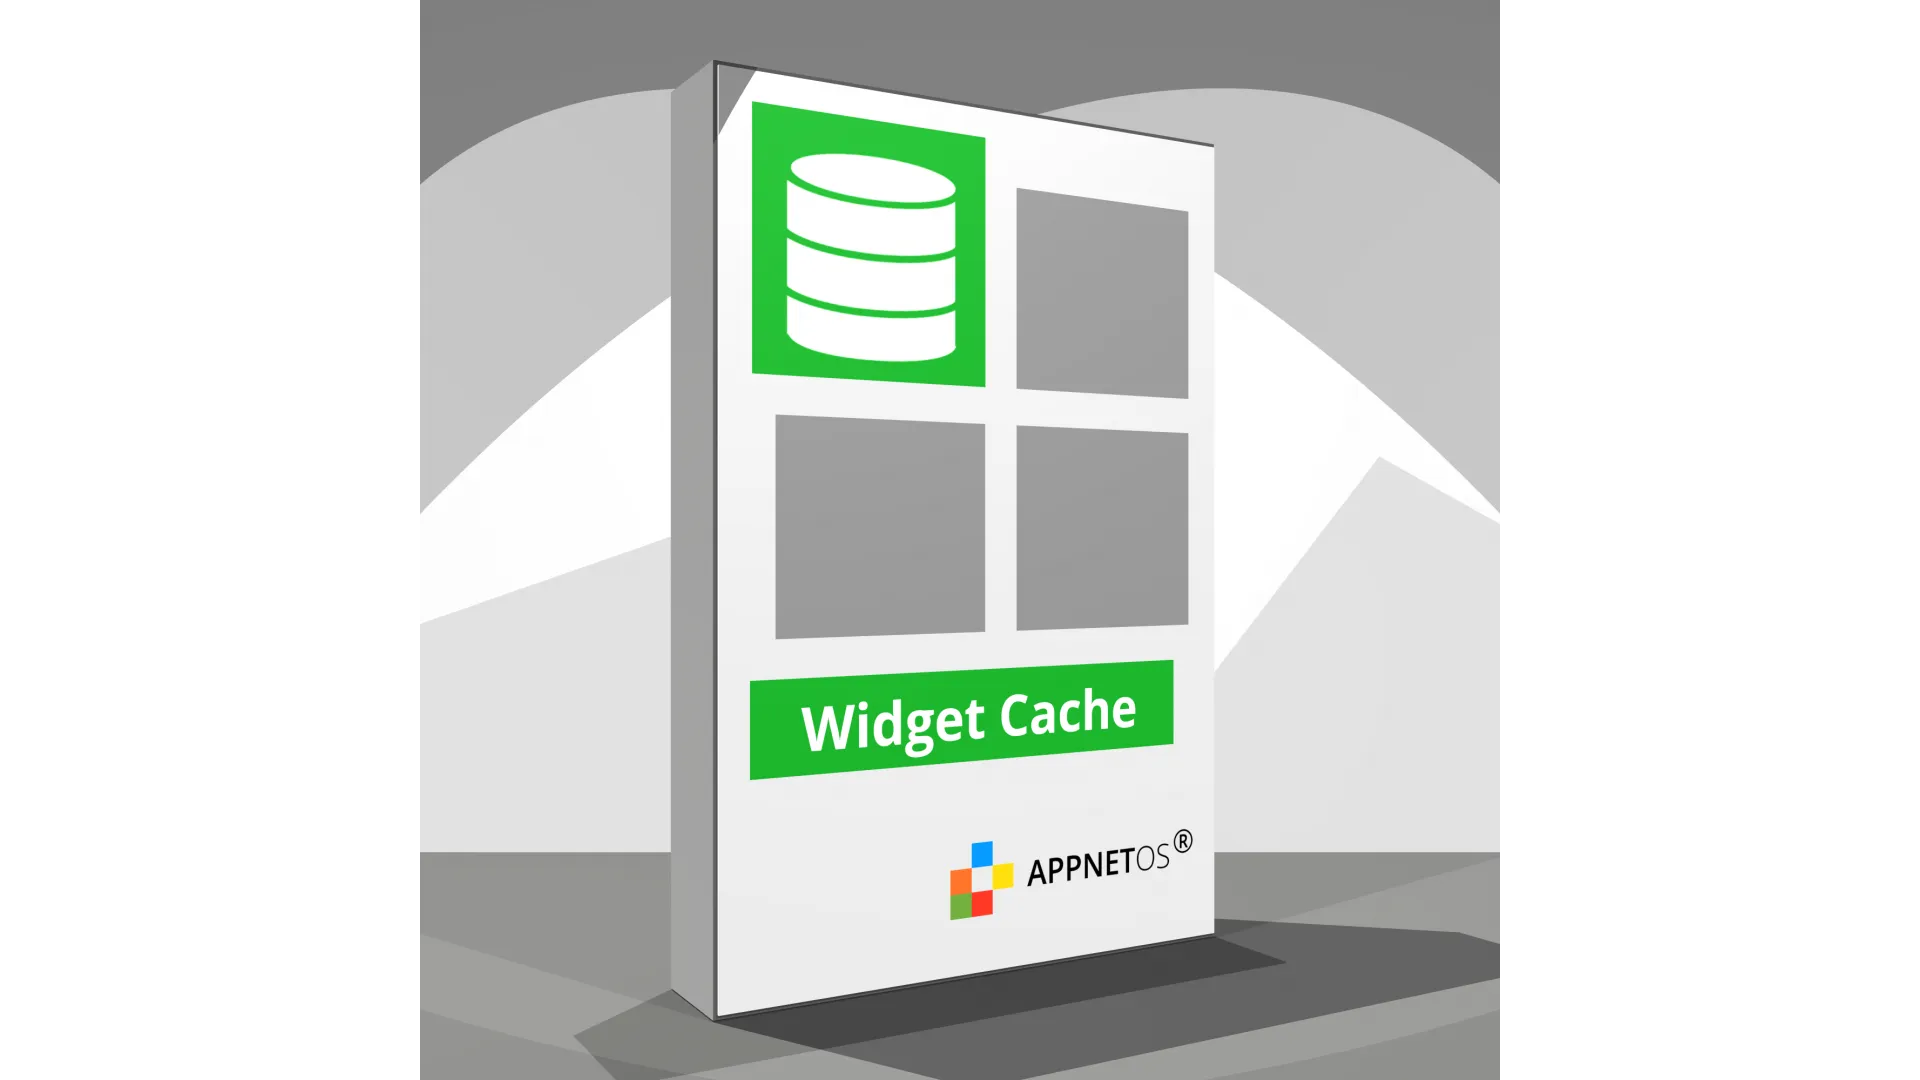 APPNET OS Widget Cache